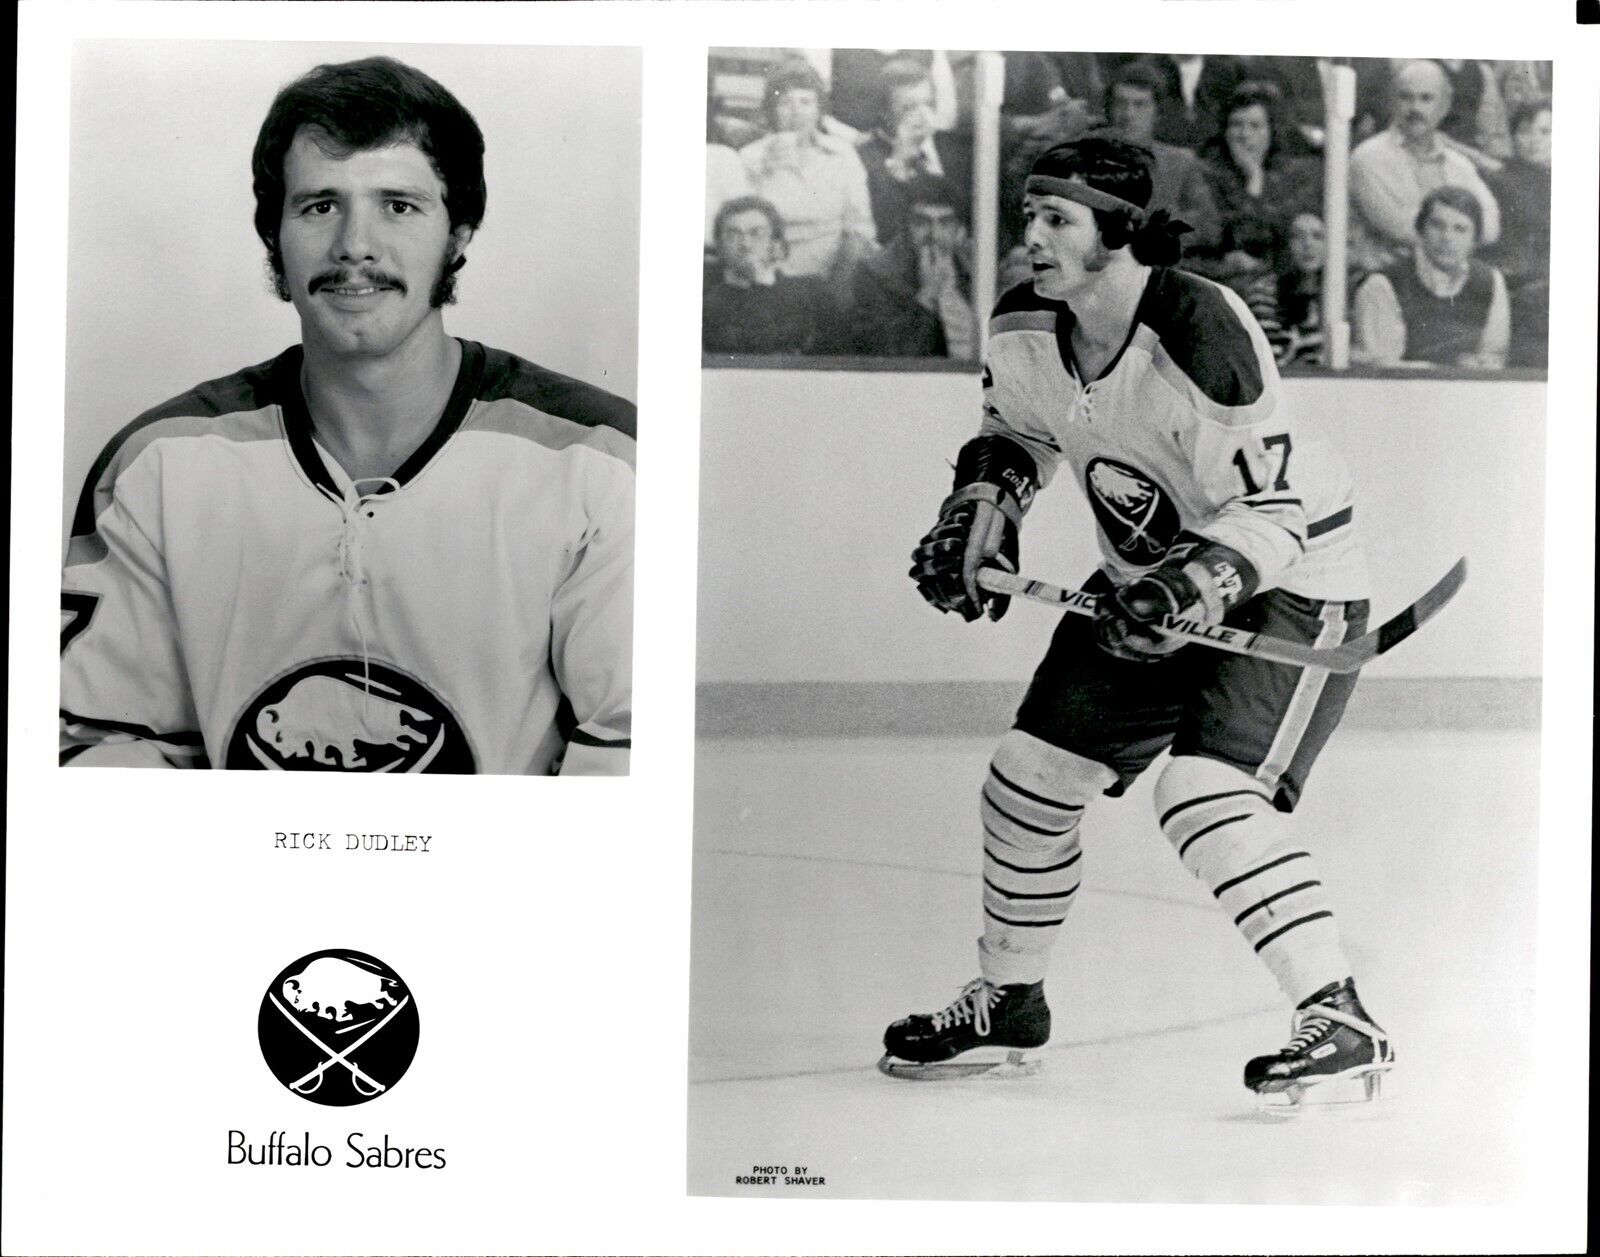 PF8 Original Photo RICK DUDLEY 1970s BUFFALO SABRES LEFT WING CLASSIC NHL HOCKEY